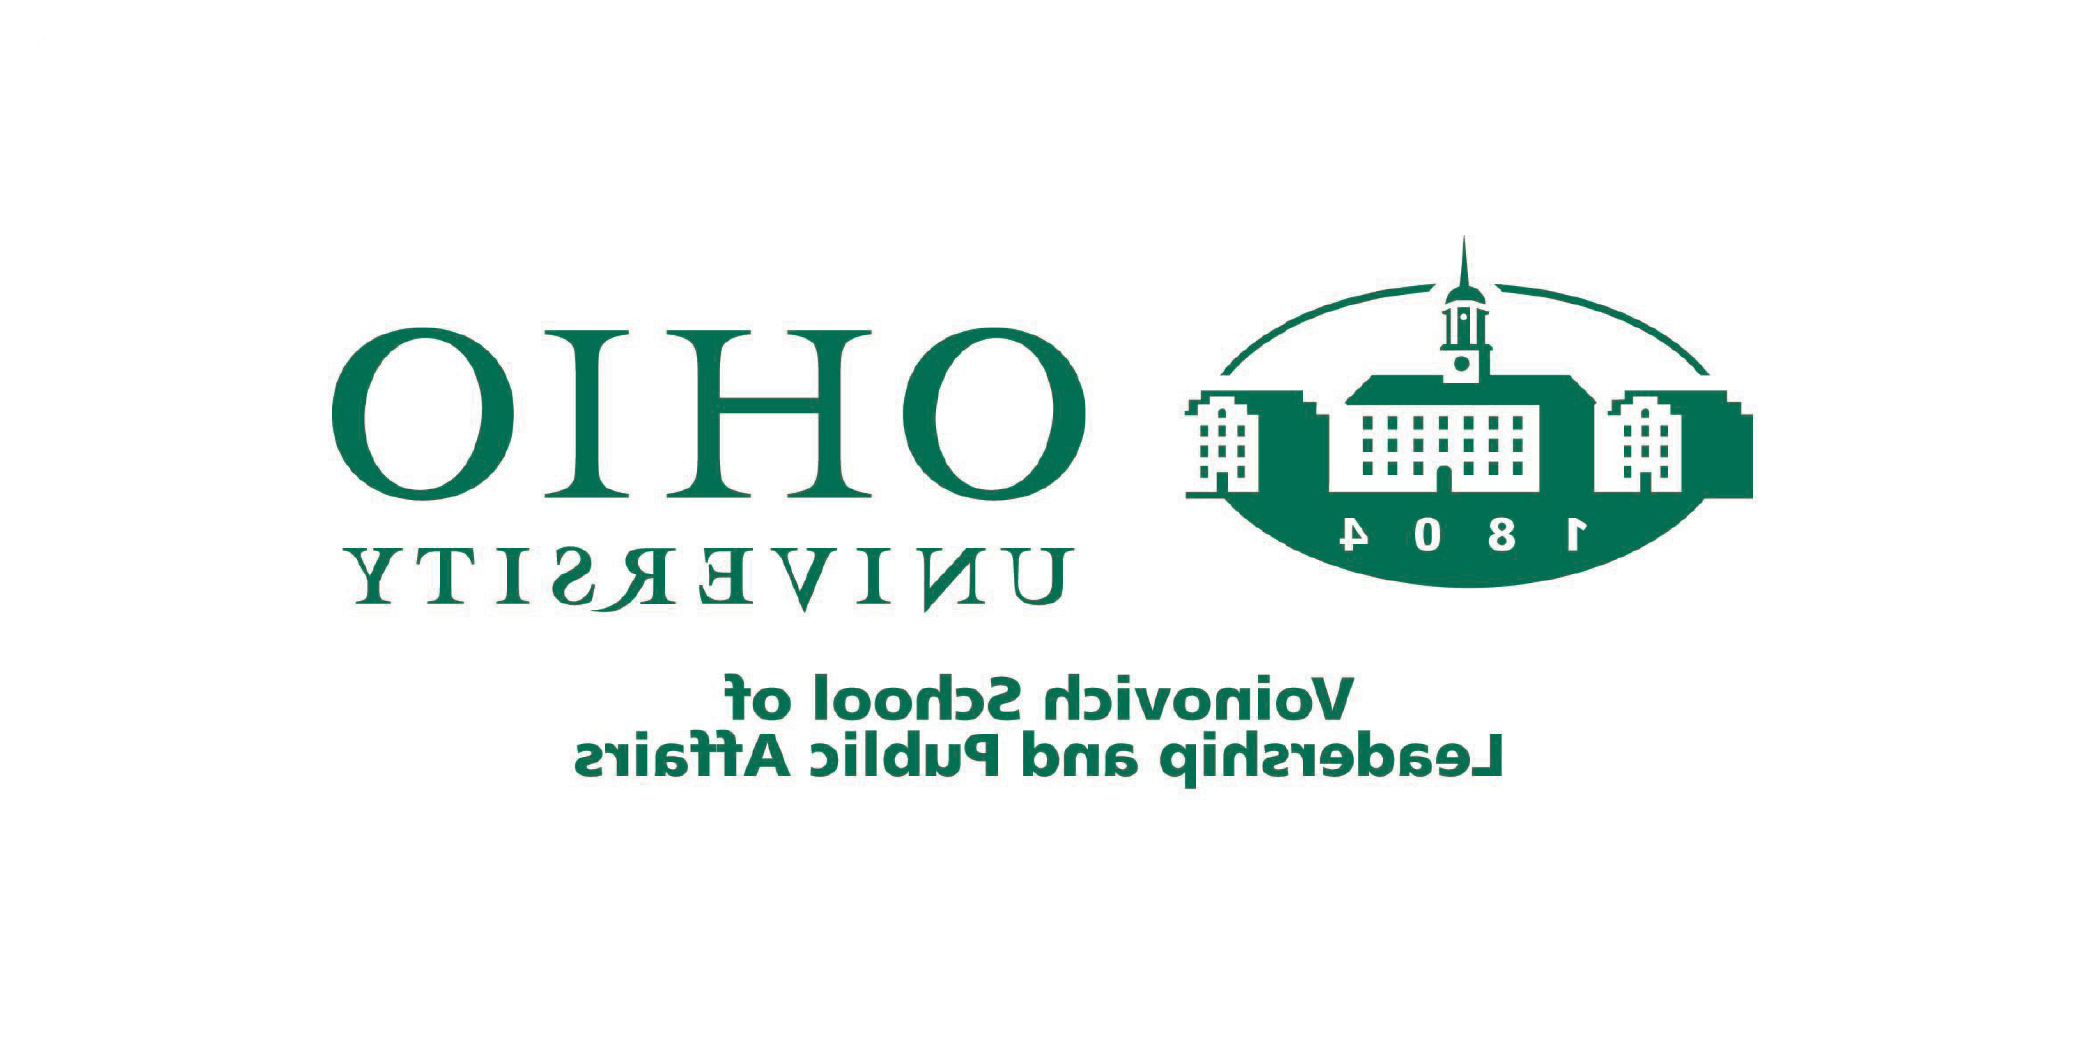 OhioU-Logo-for-Web